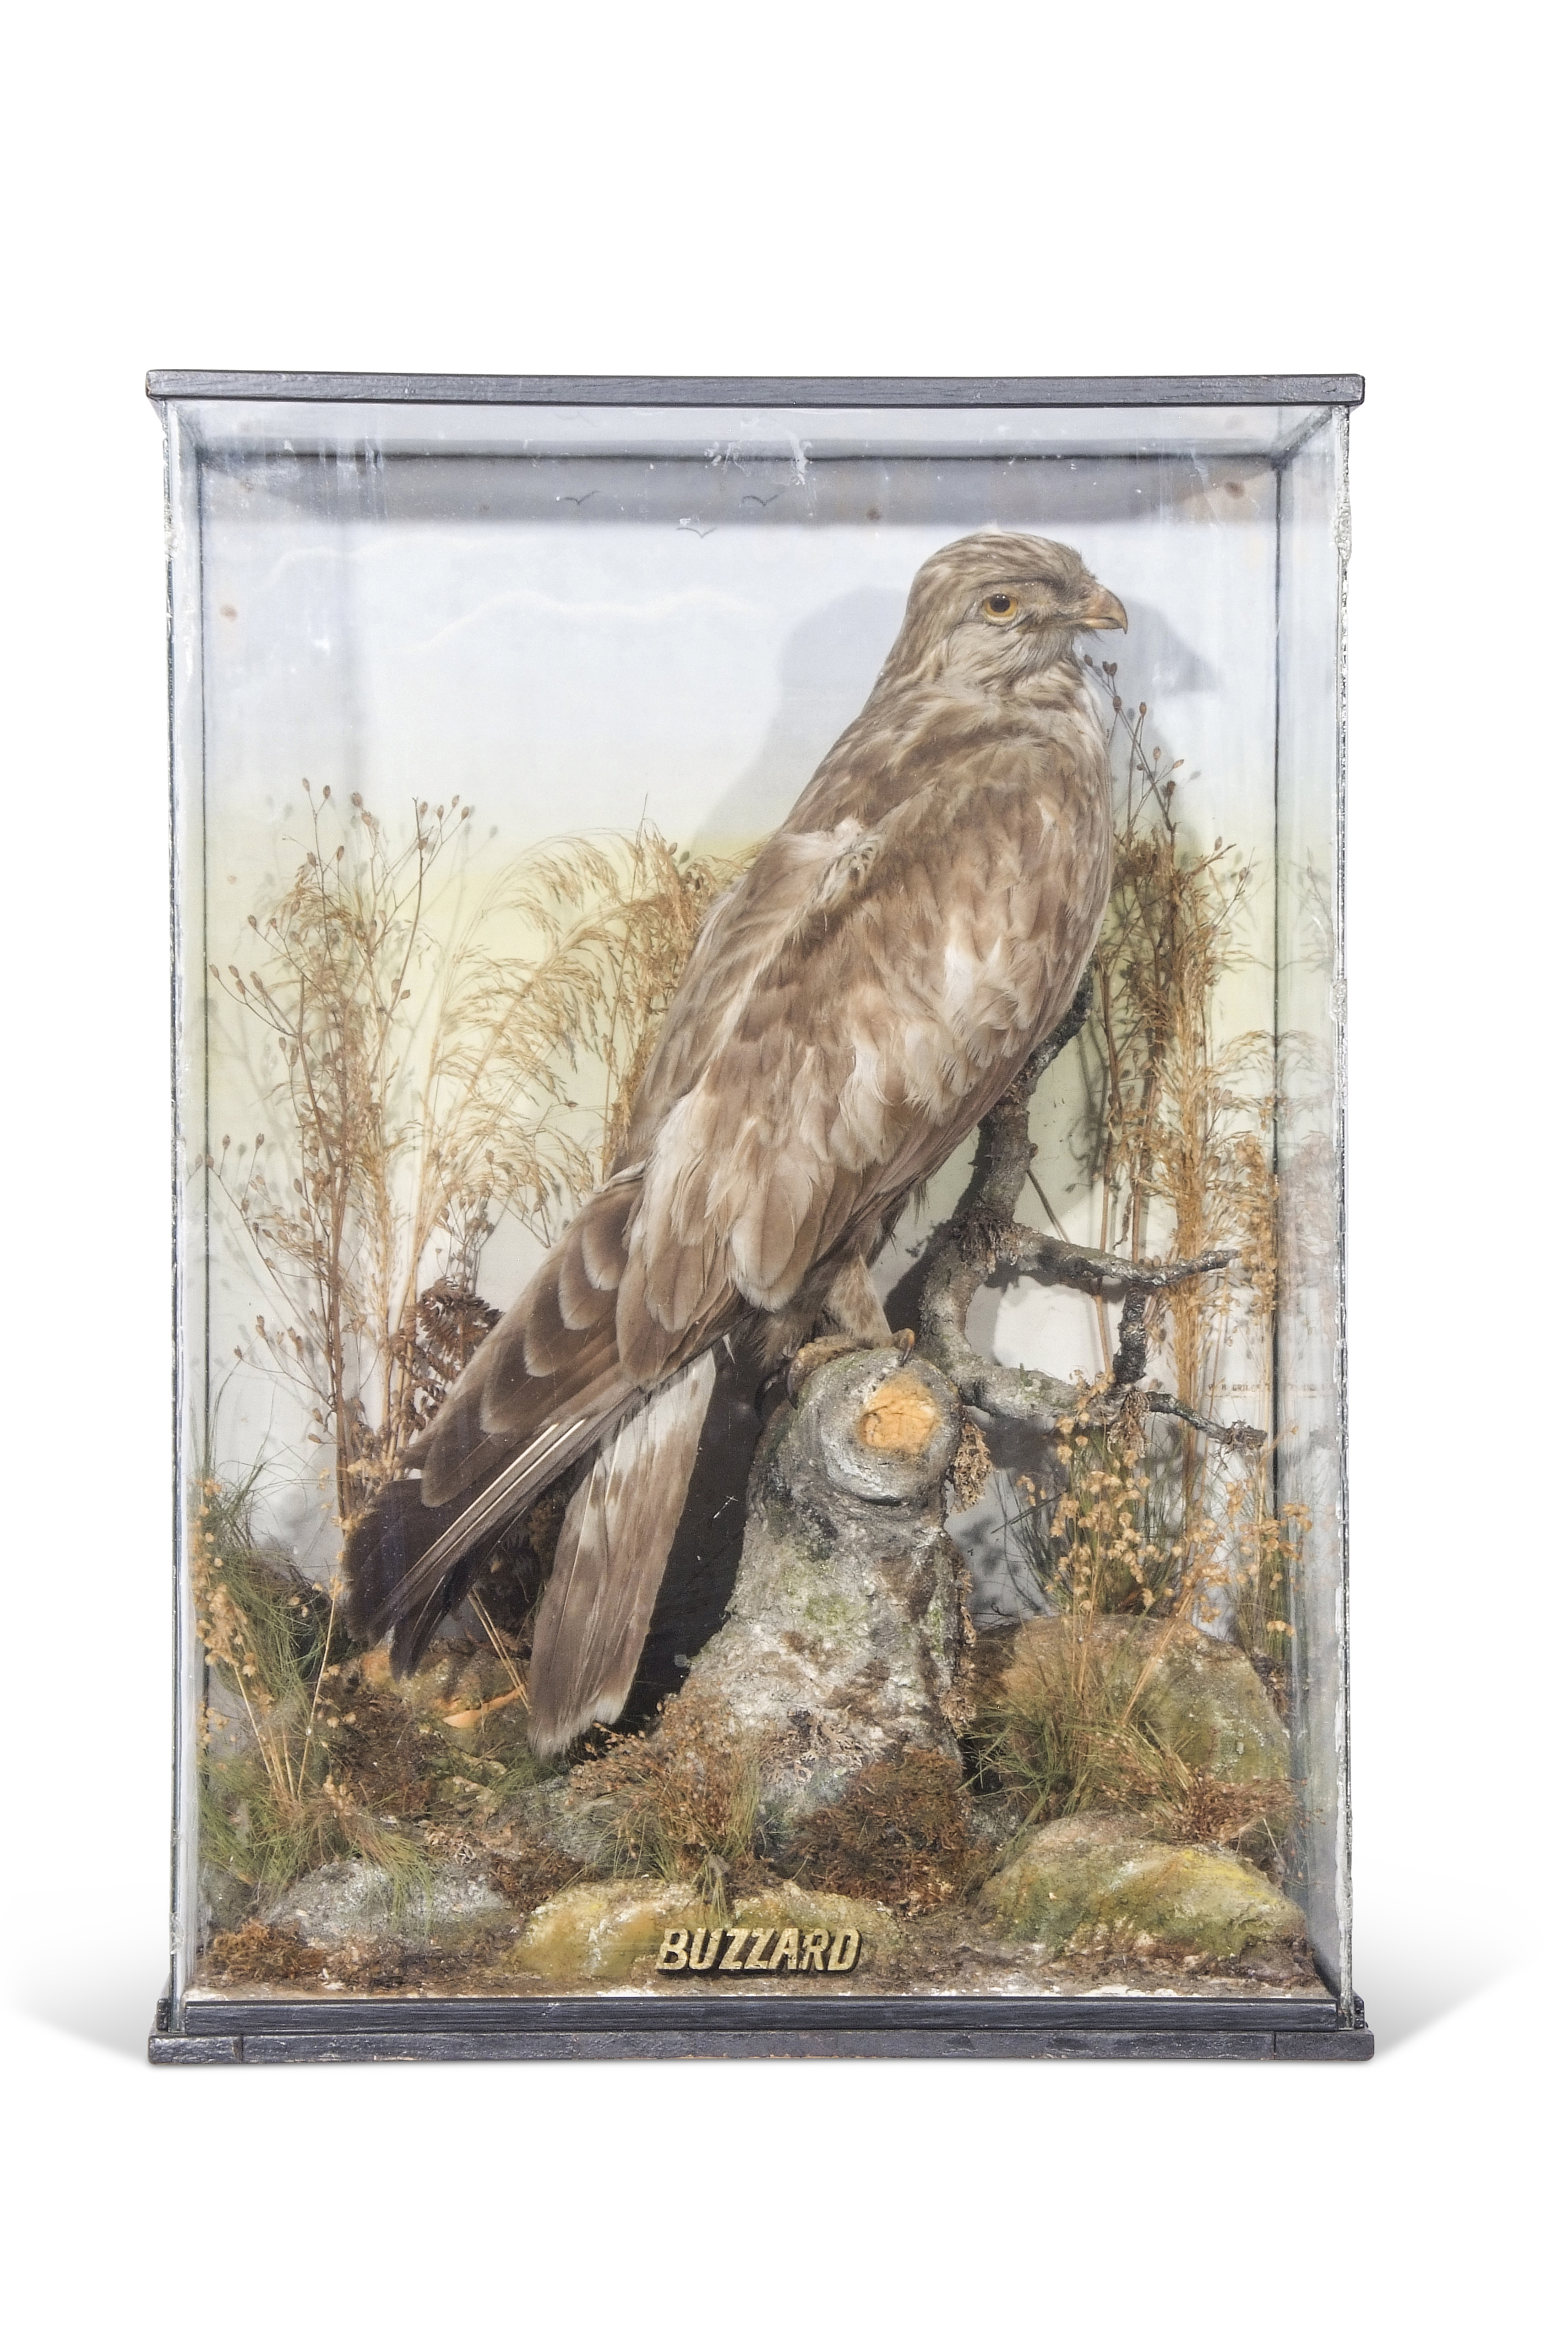 Taxidermy cased Buzzard in naturalistic setting, 62 x 45cm